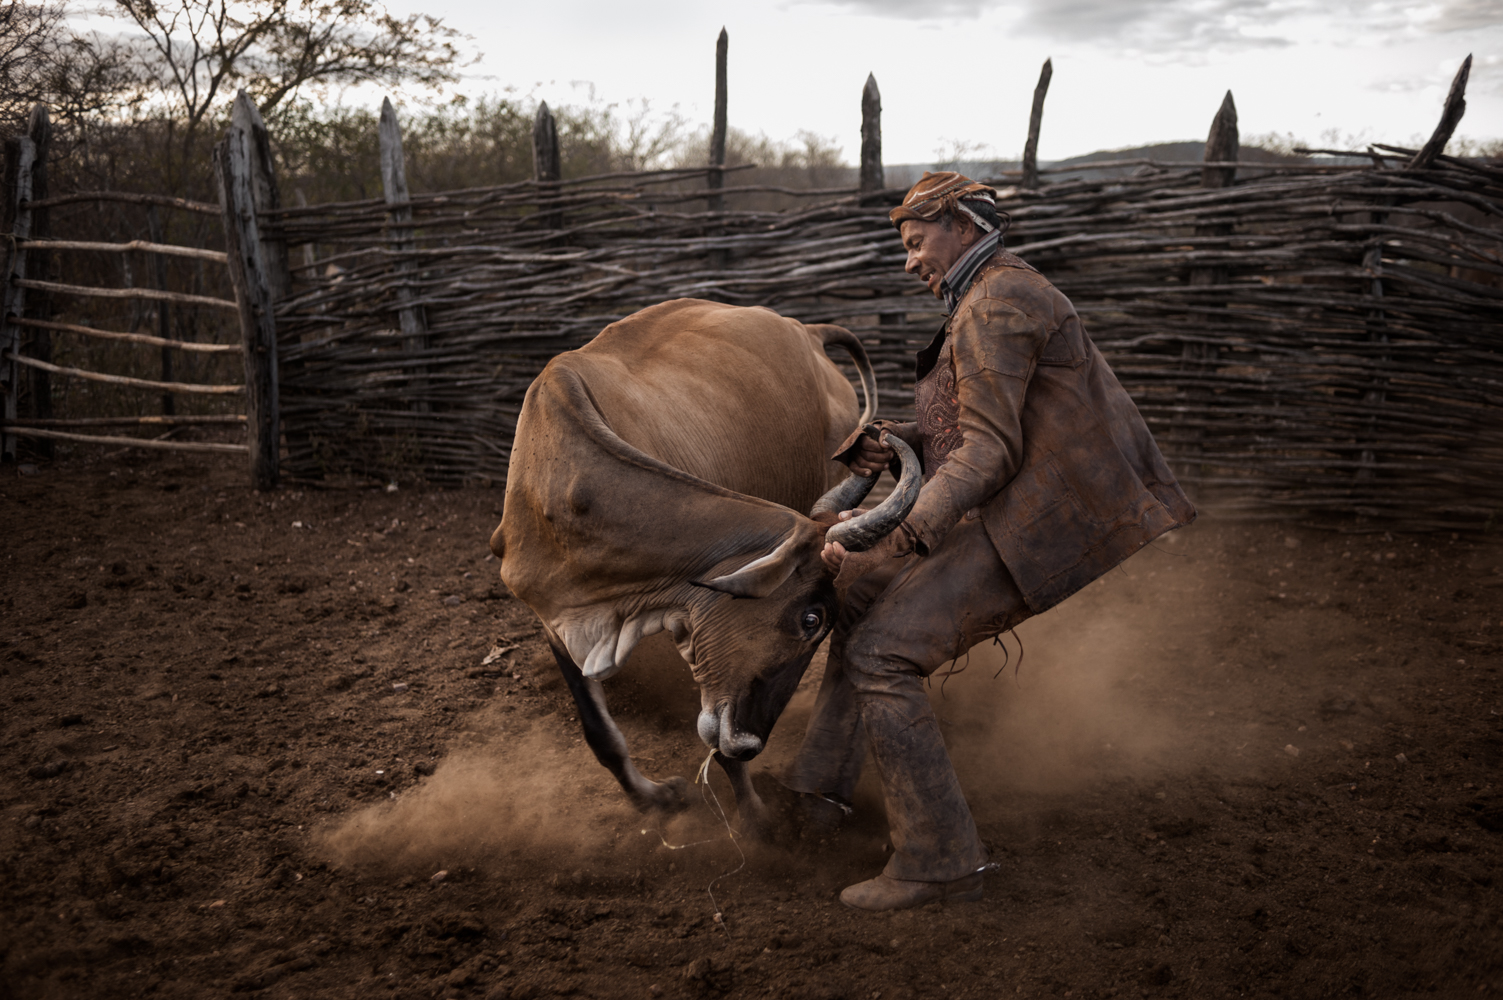 Handling cattle in the tough "Sertao"